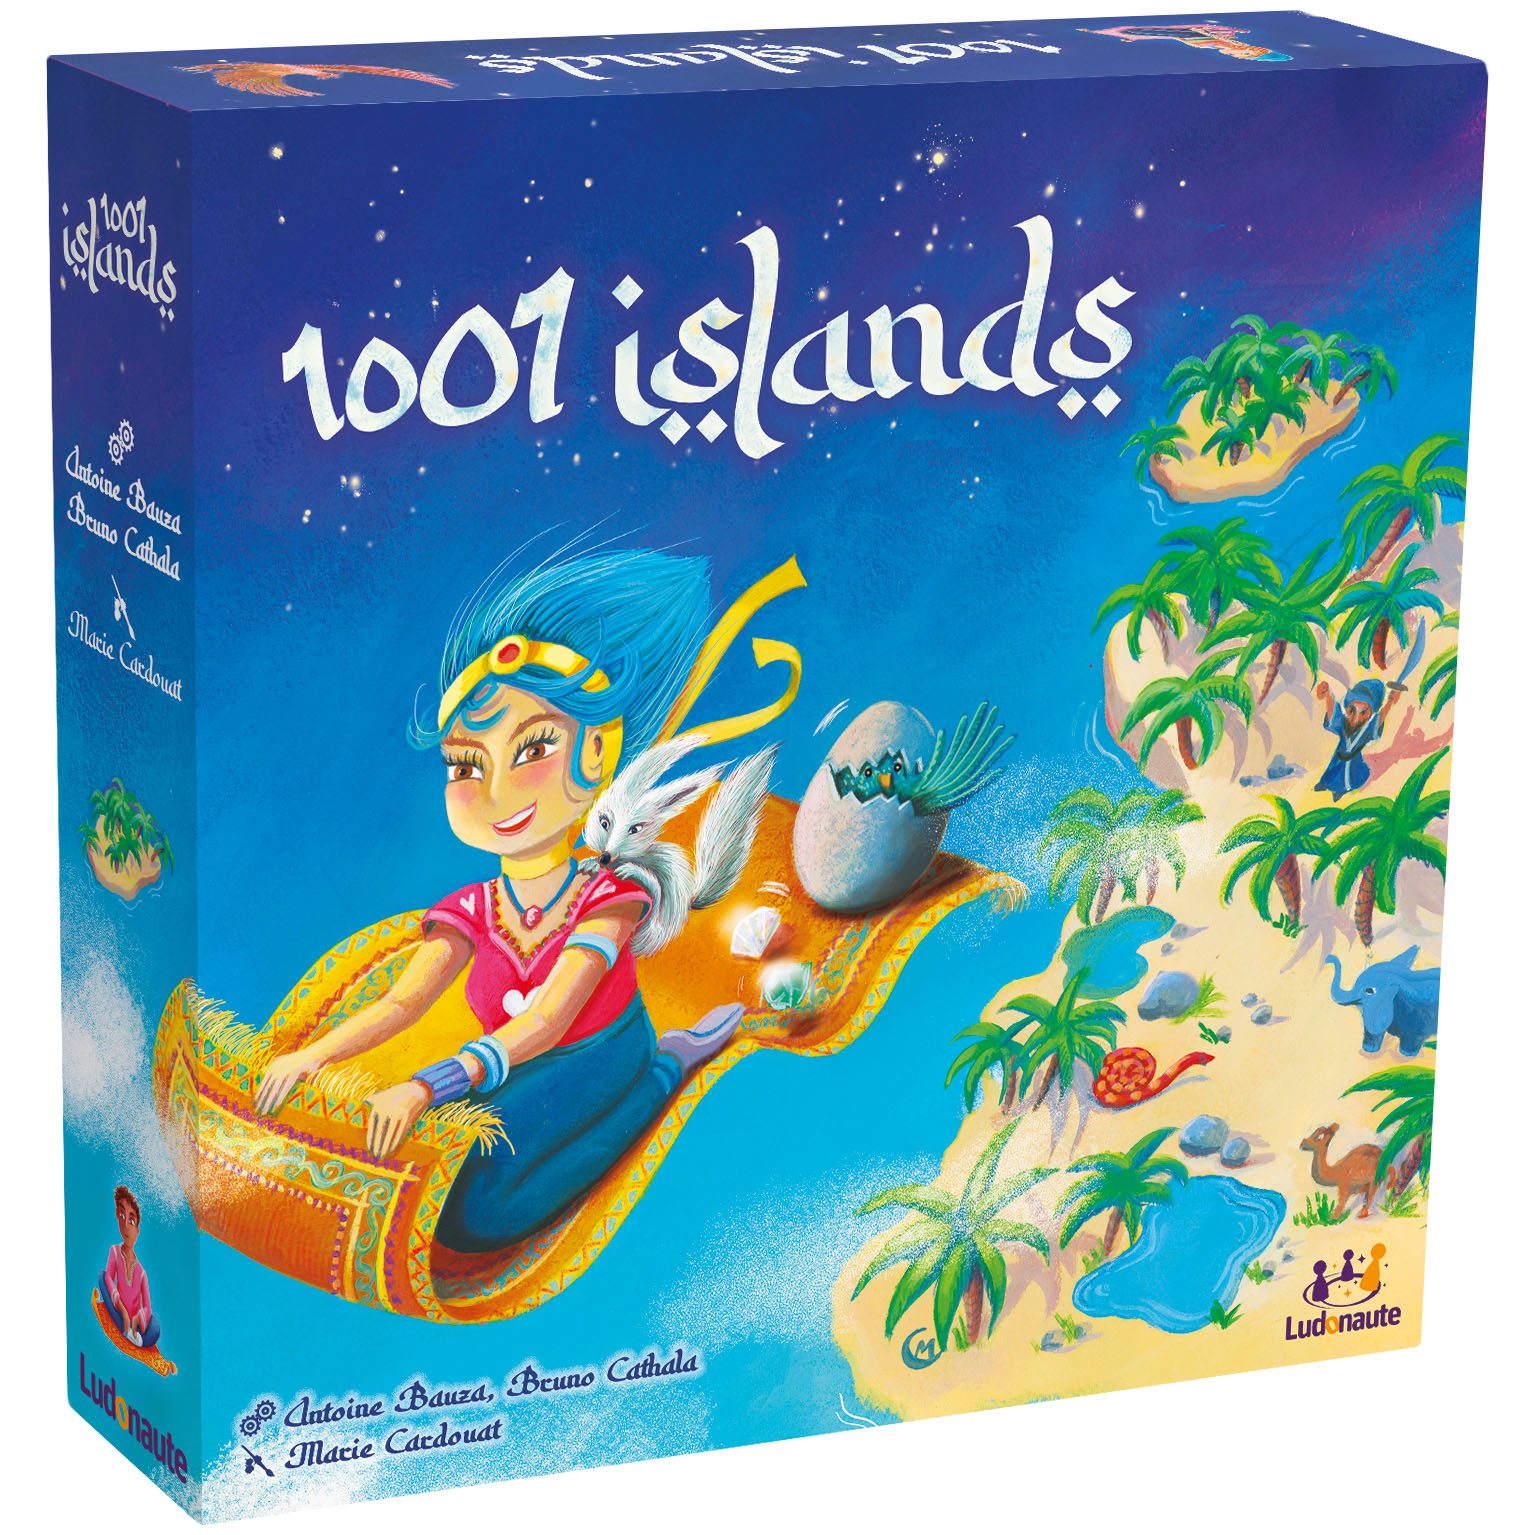 1001 Islands - Ludonaute